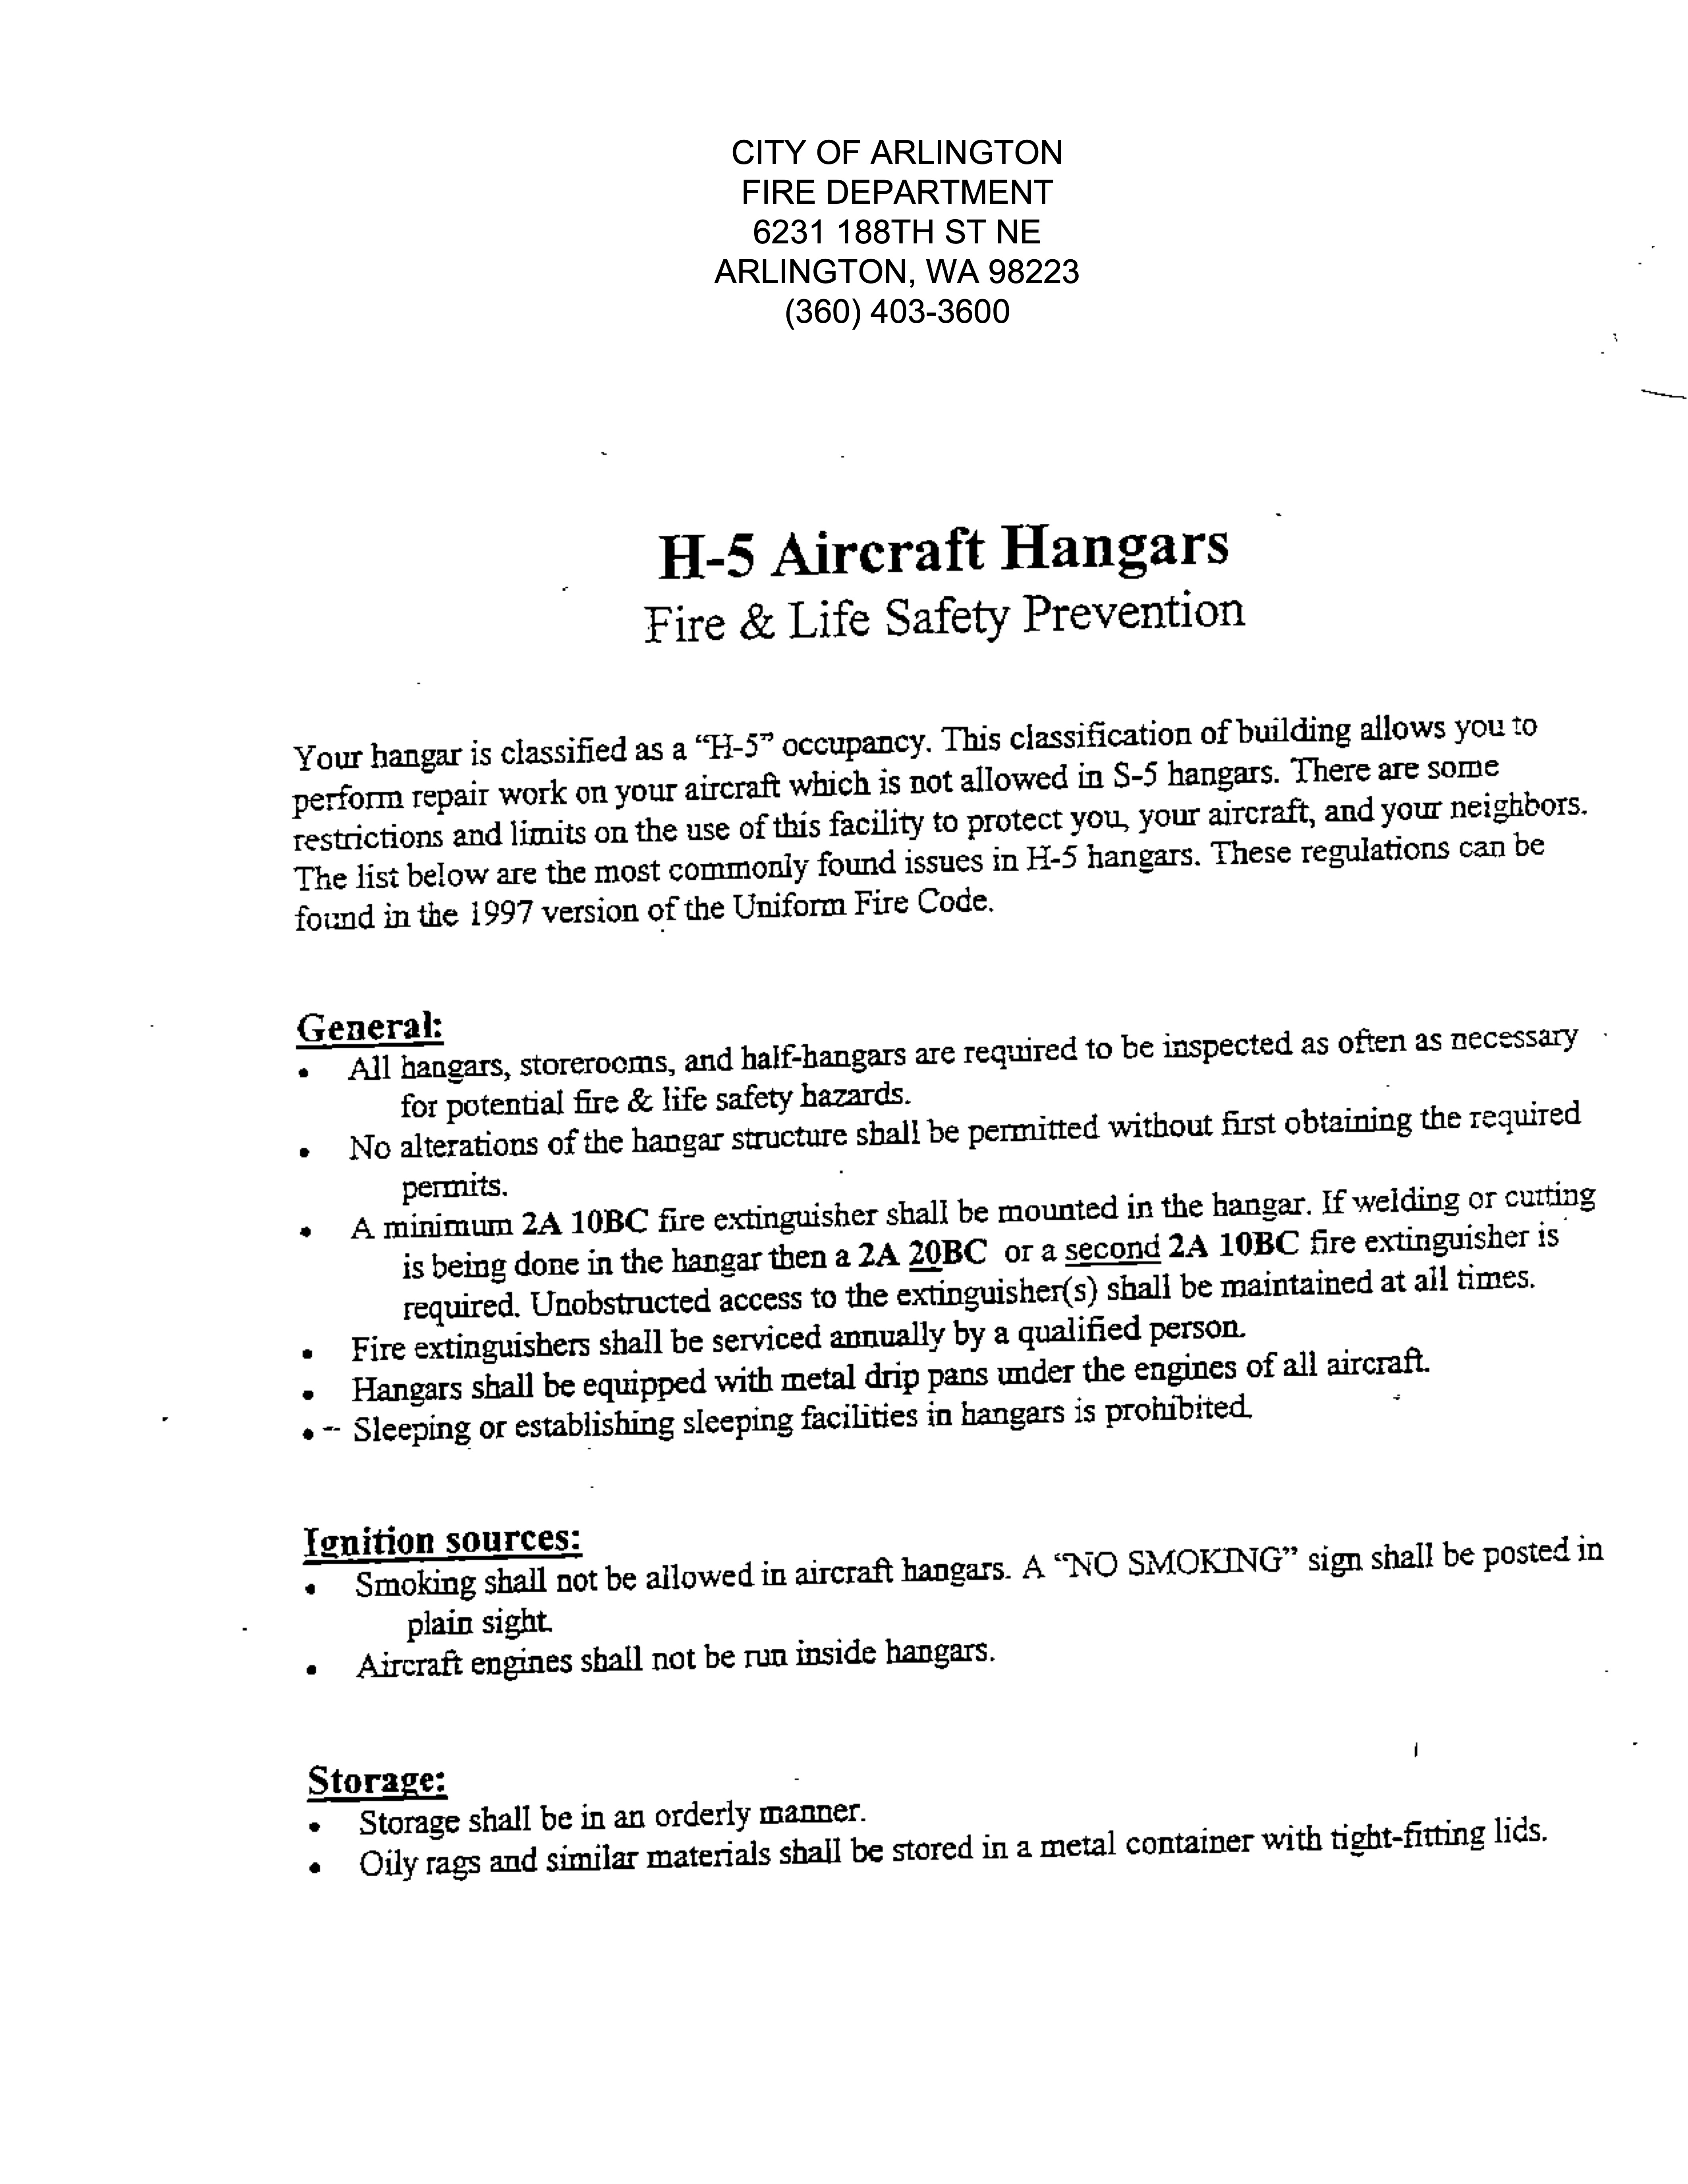 H-5 HANGAR Page 1.jpg